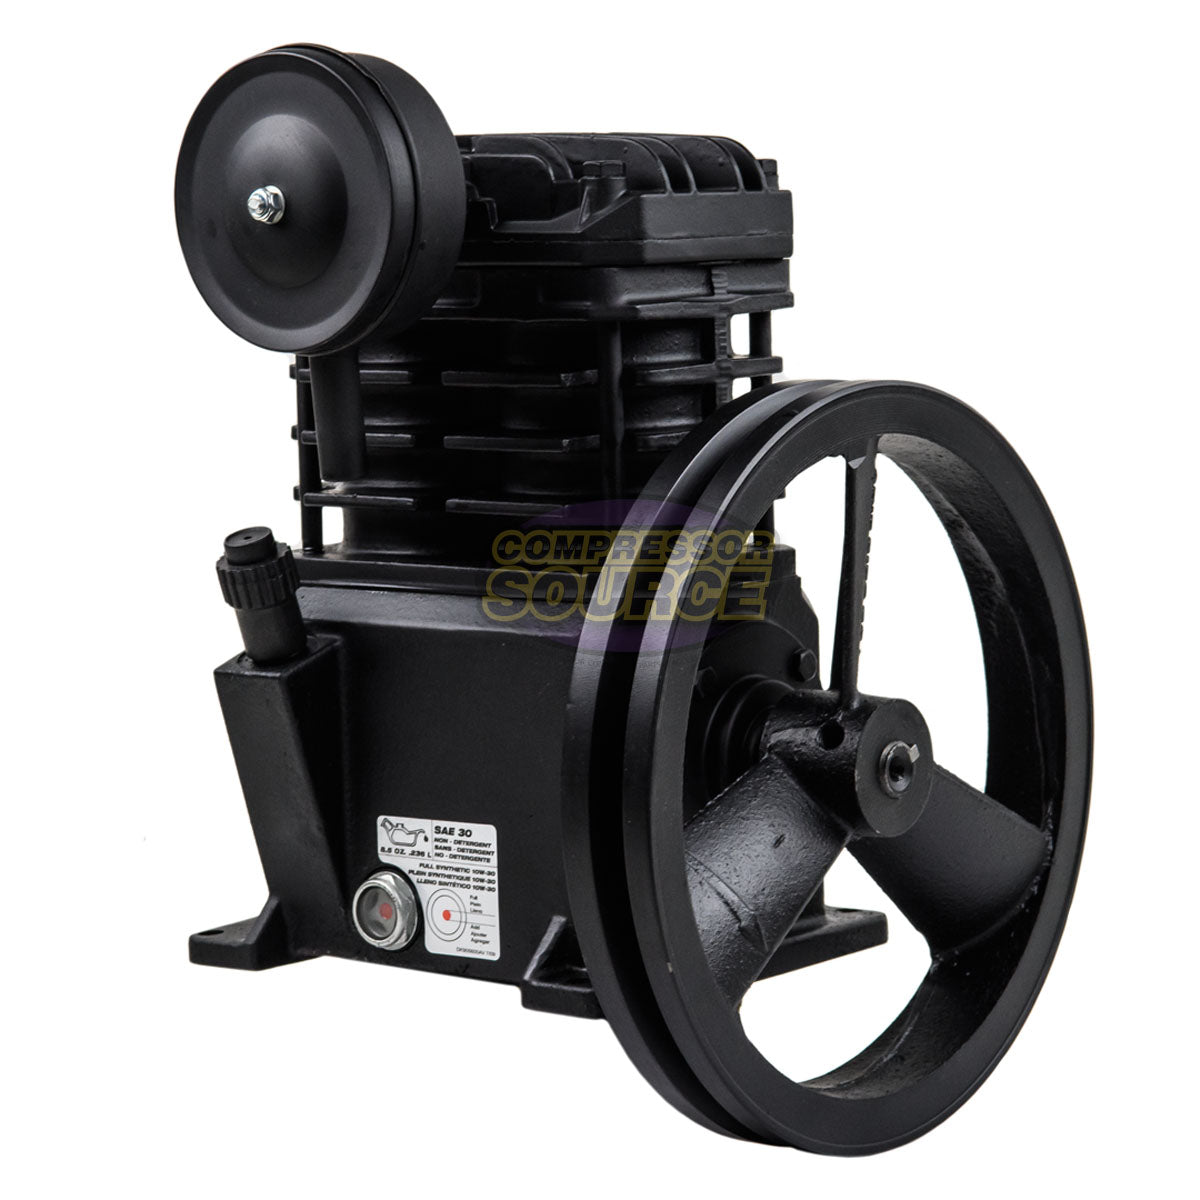 2HP Replacement Air Compressor Pump for Husky VT631505 VT635800 Cast Iron New